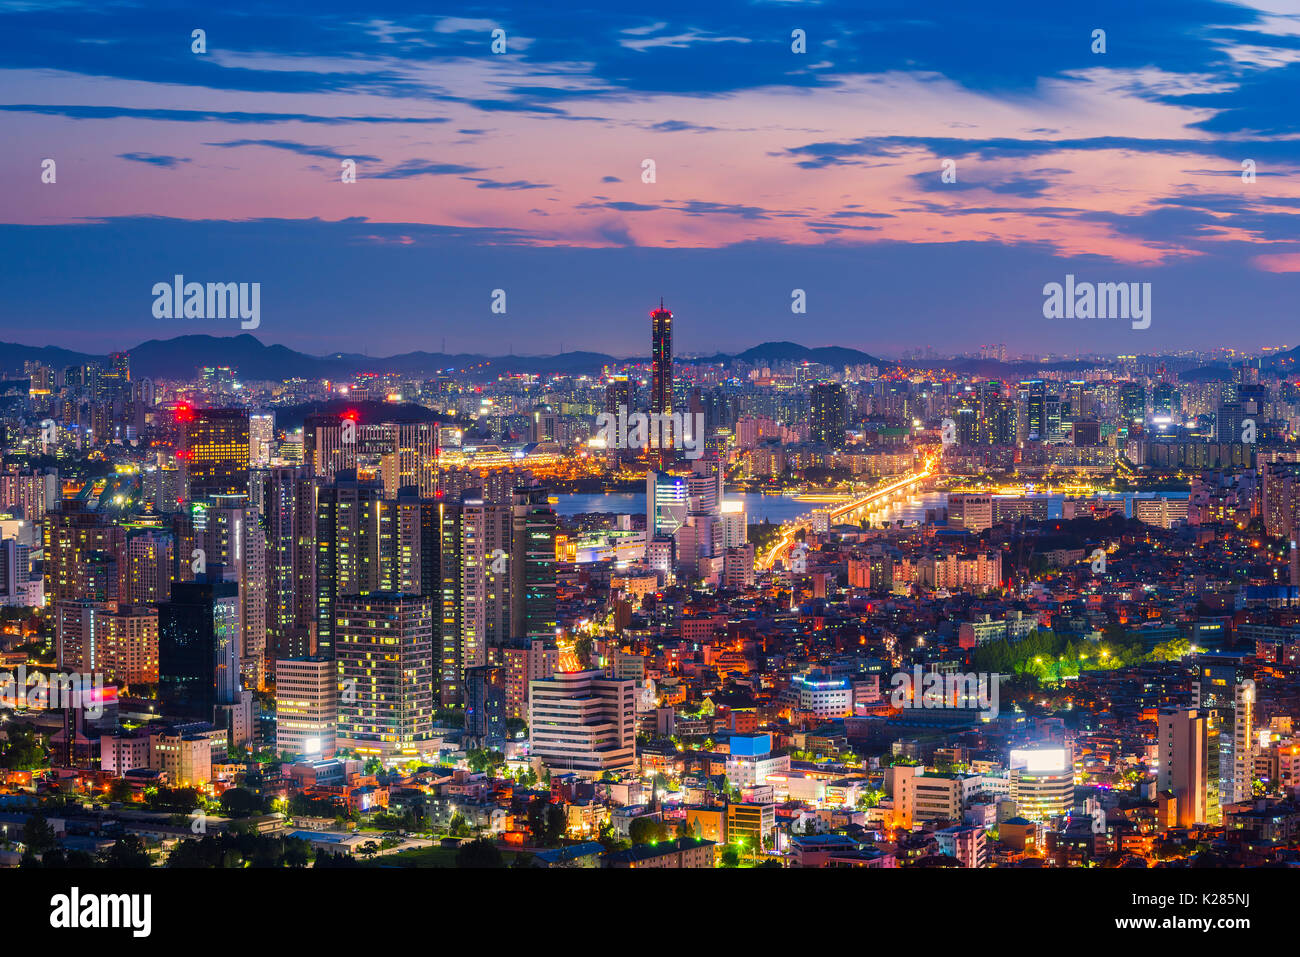 Sunset at 63 Building of Seoul City,South Korea. Stock Photo